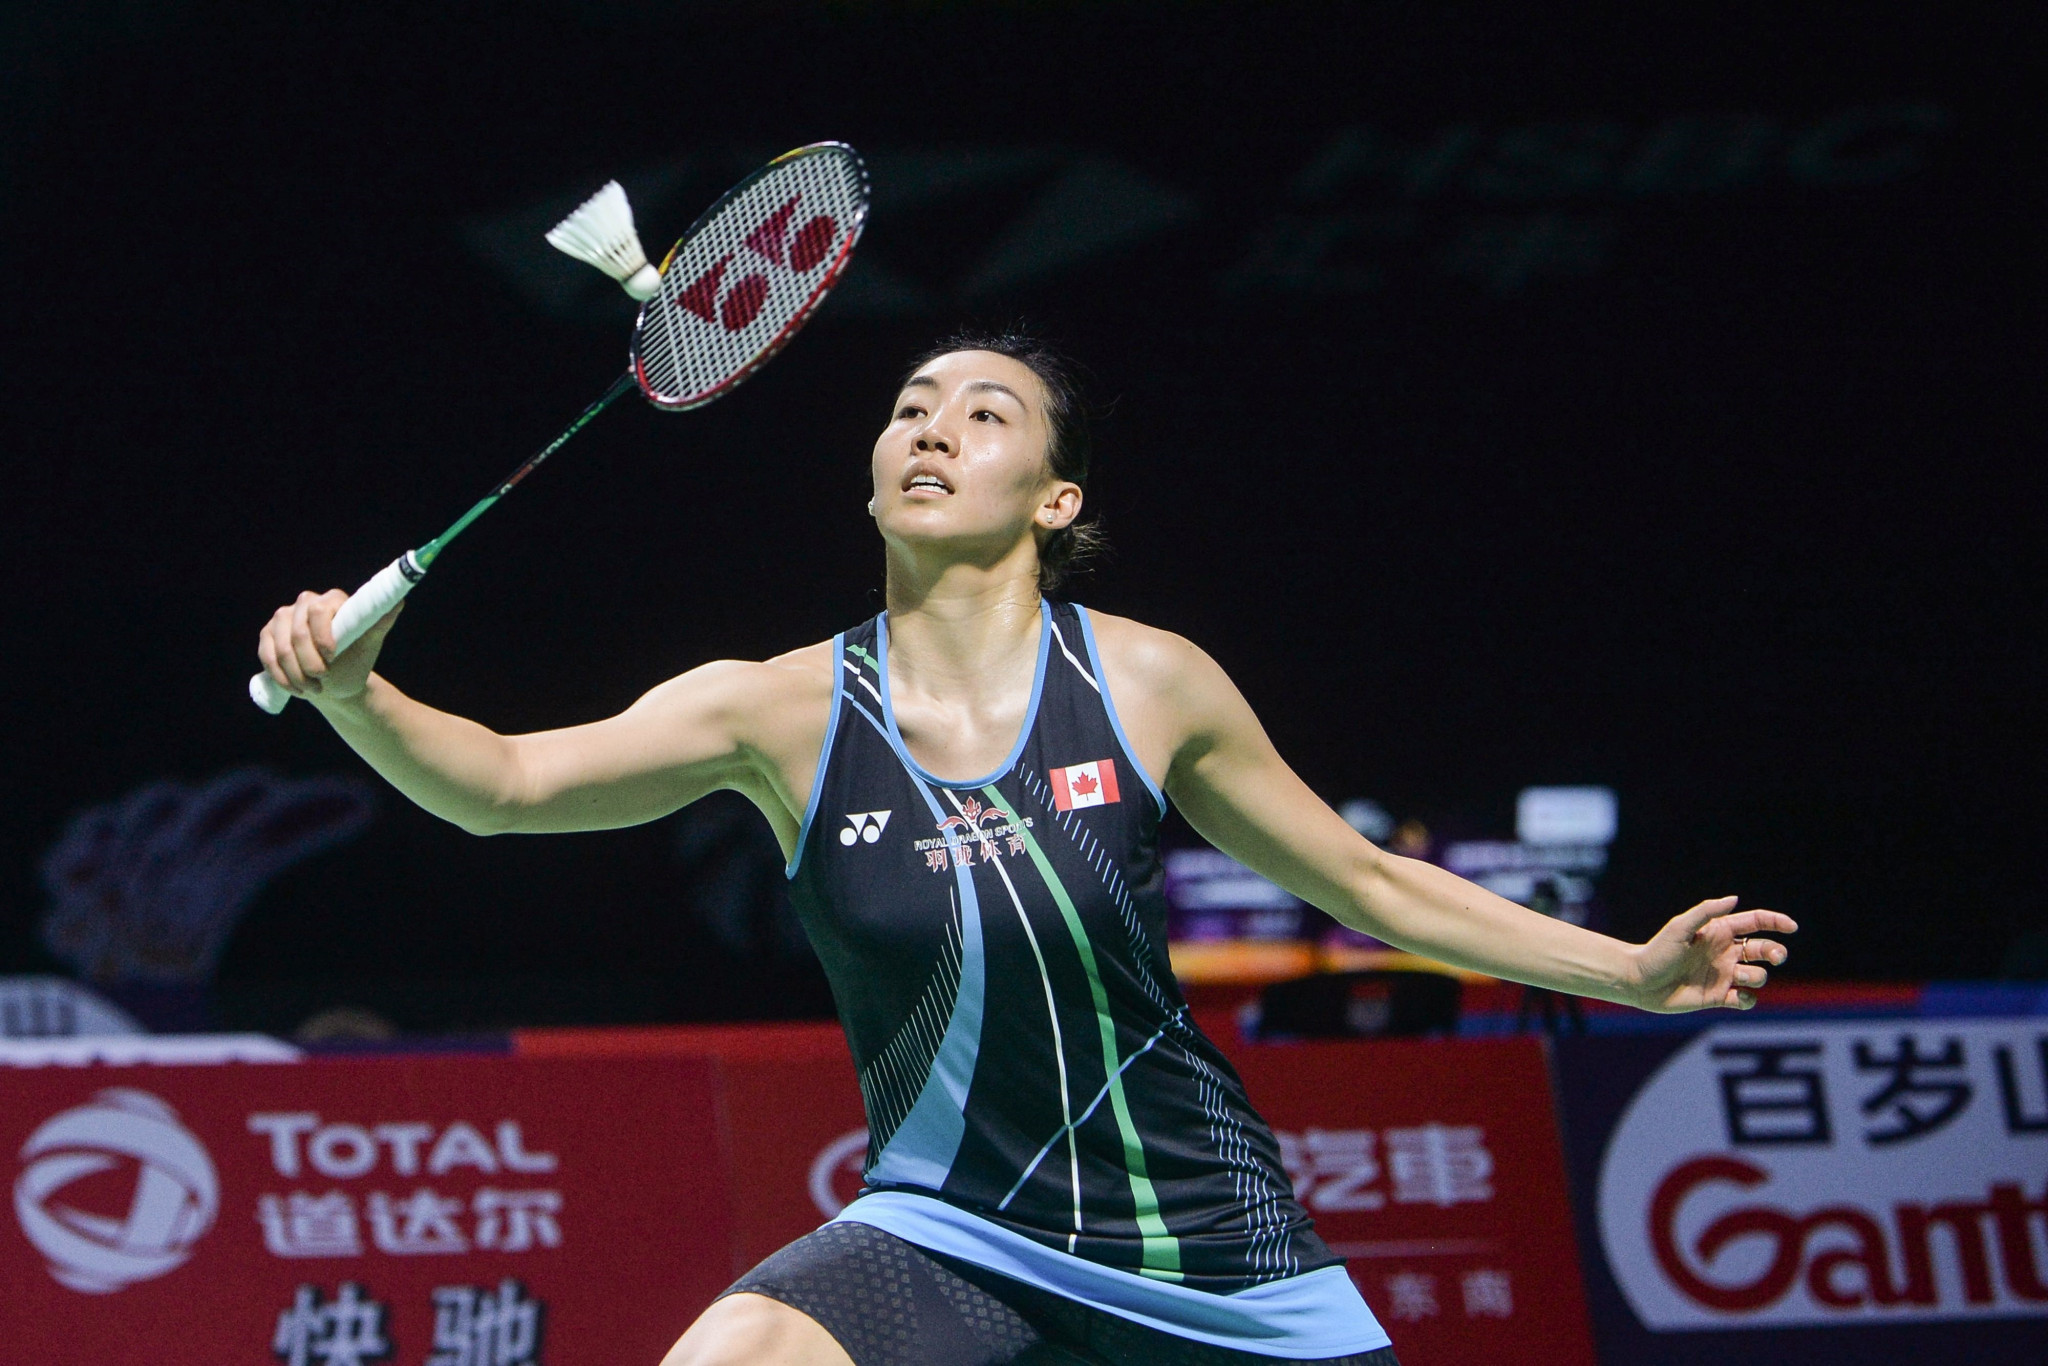 Li saves match points to claim Pan Am Individual Badminton Championships title